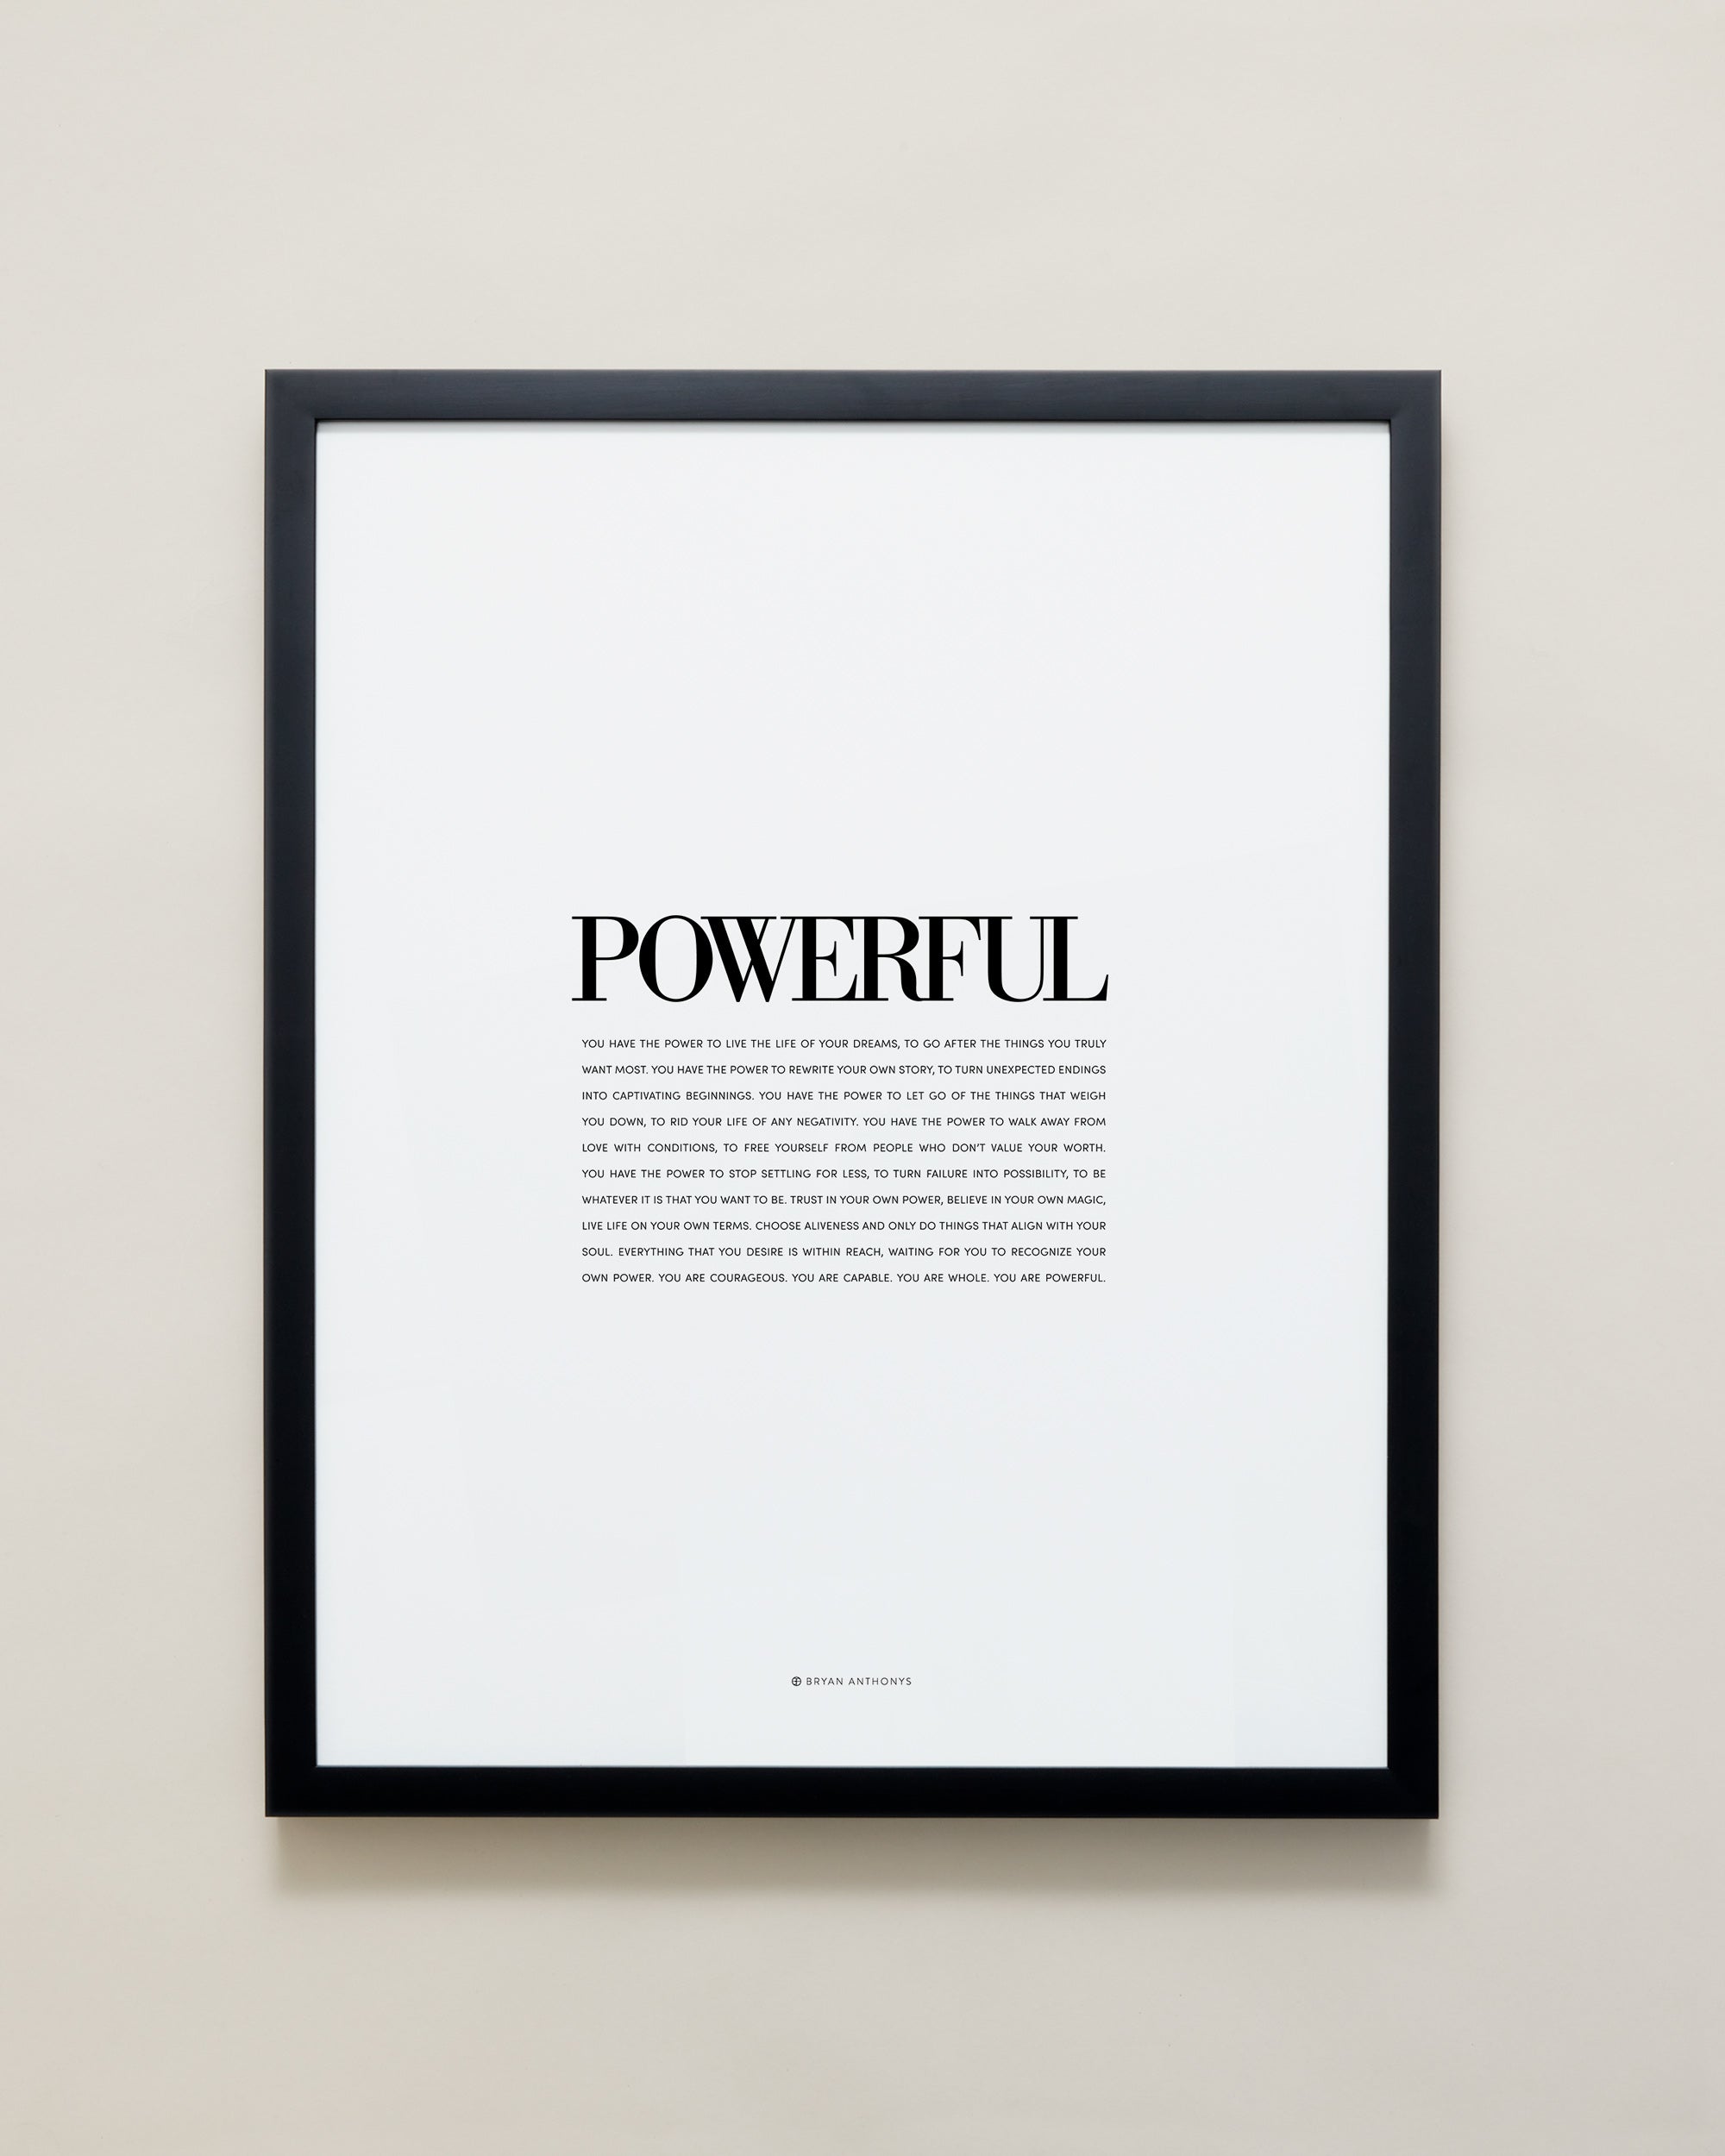 Bryan Anthonys Home Decor Purposeful Prints Powerful Editorial Framed Print Black Frame 16x20